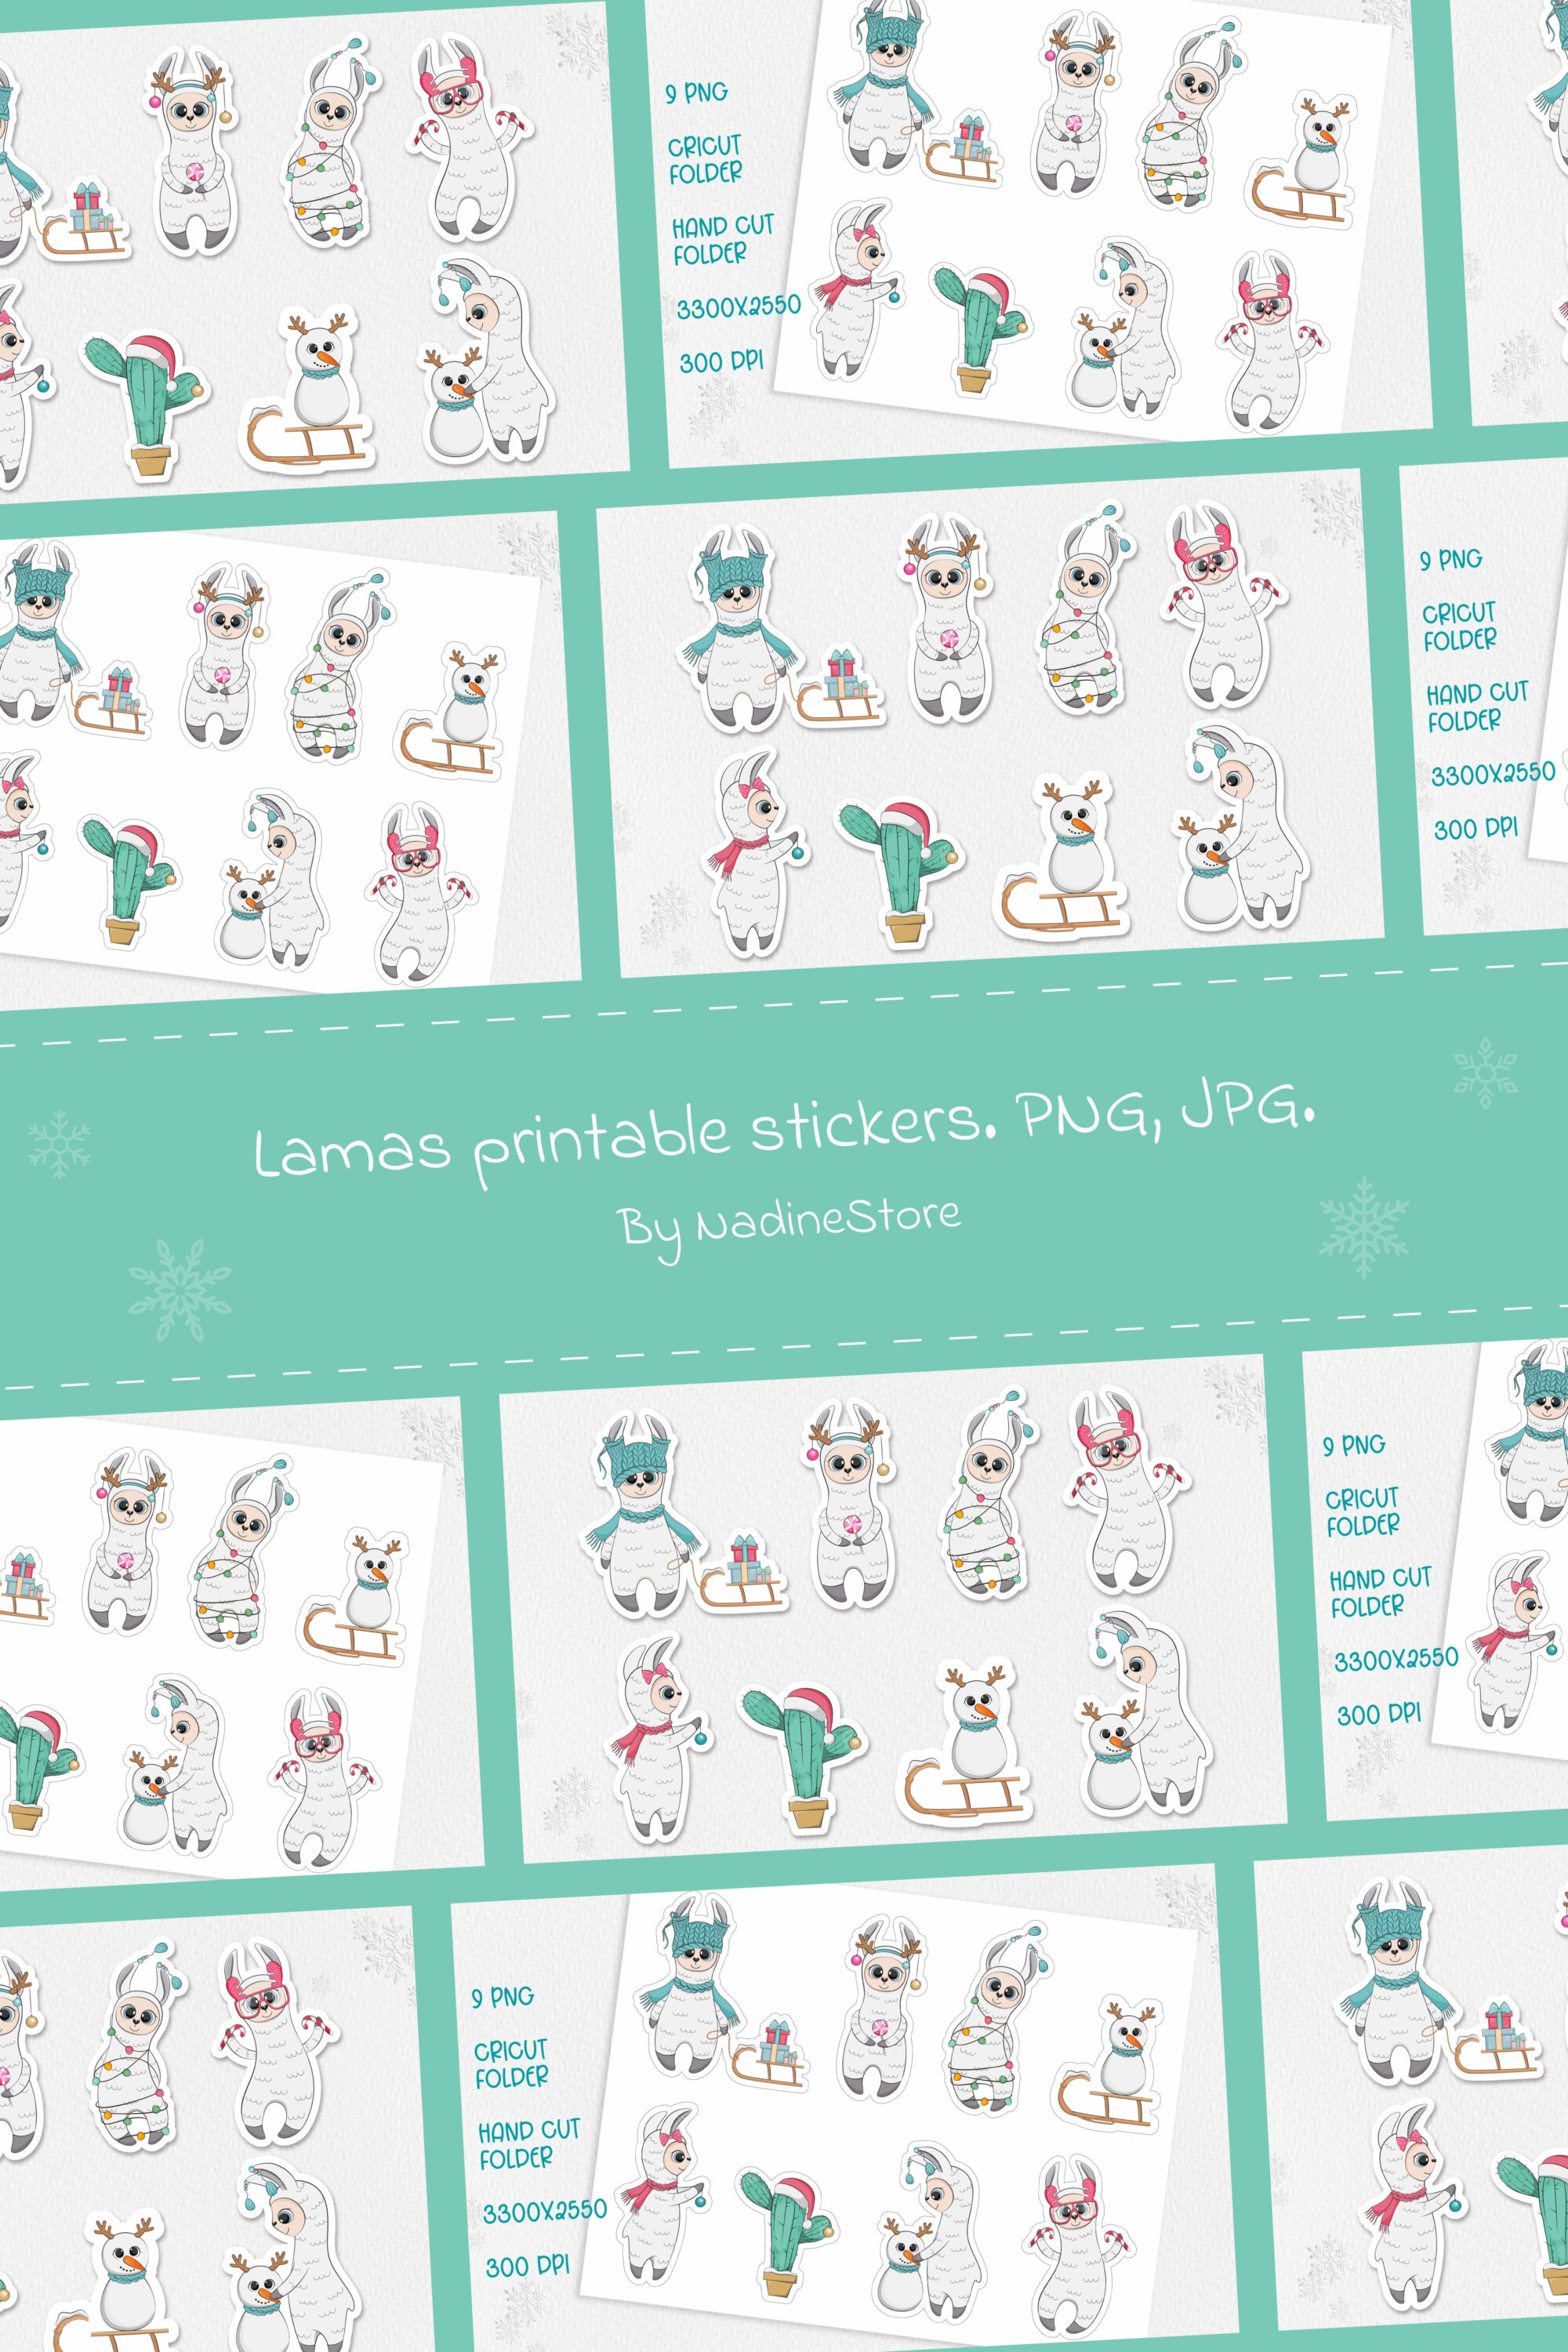 Lamas printable stickers of pinterest.